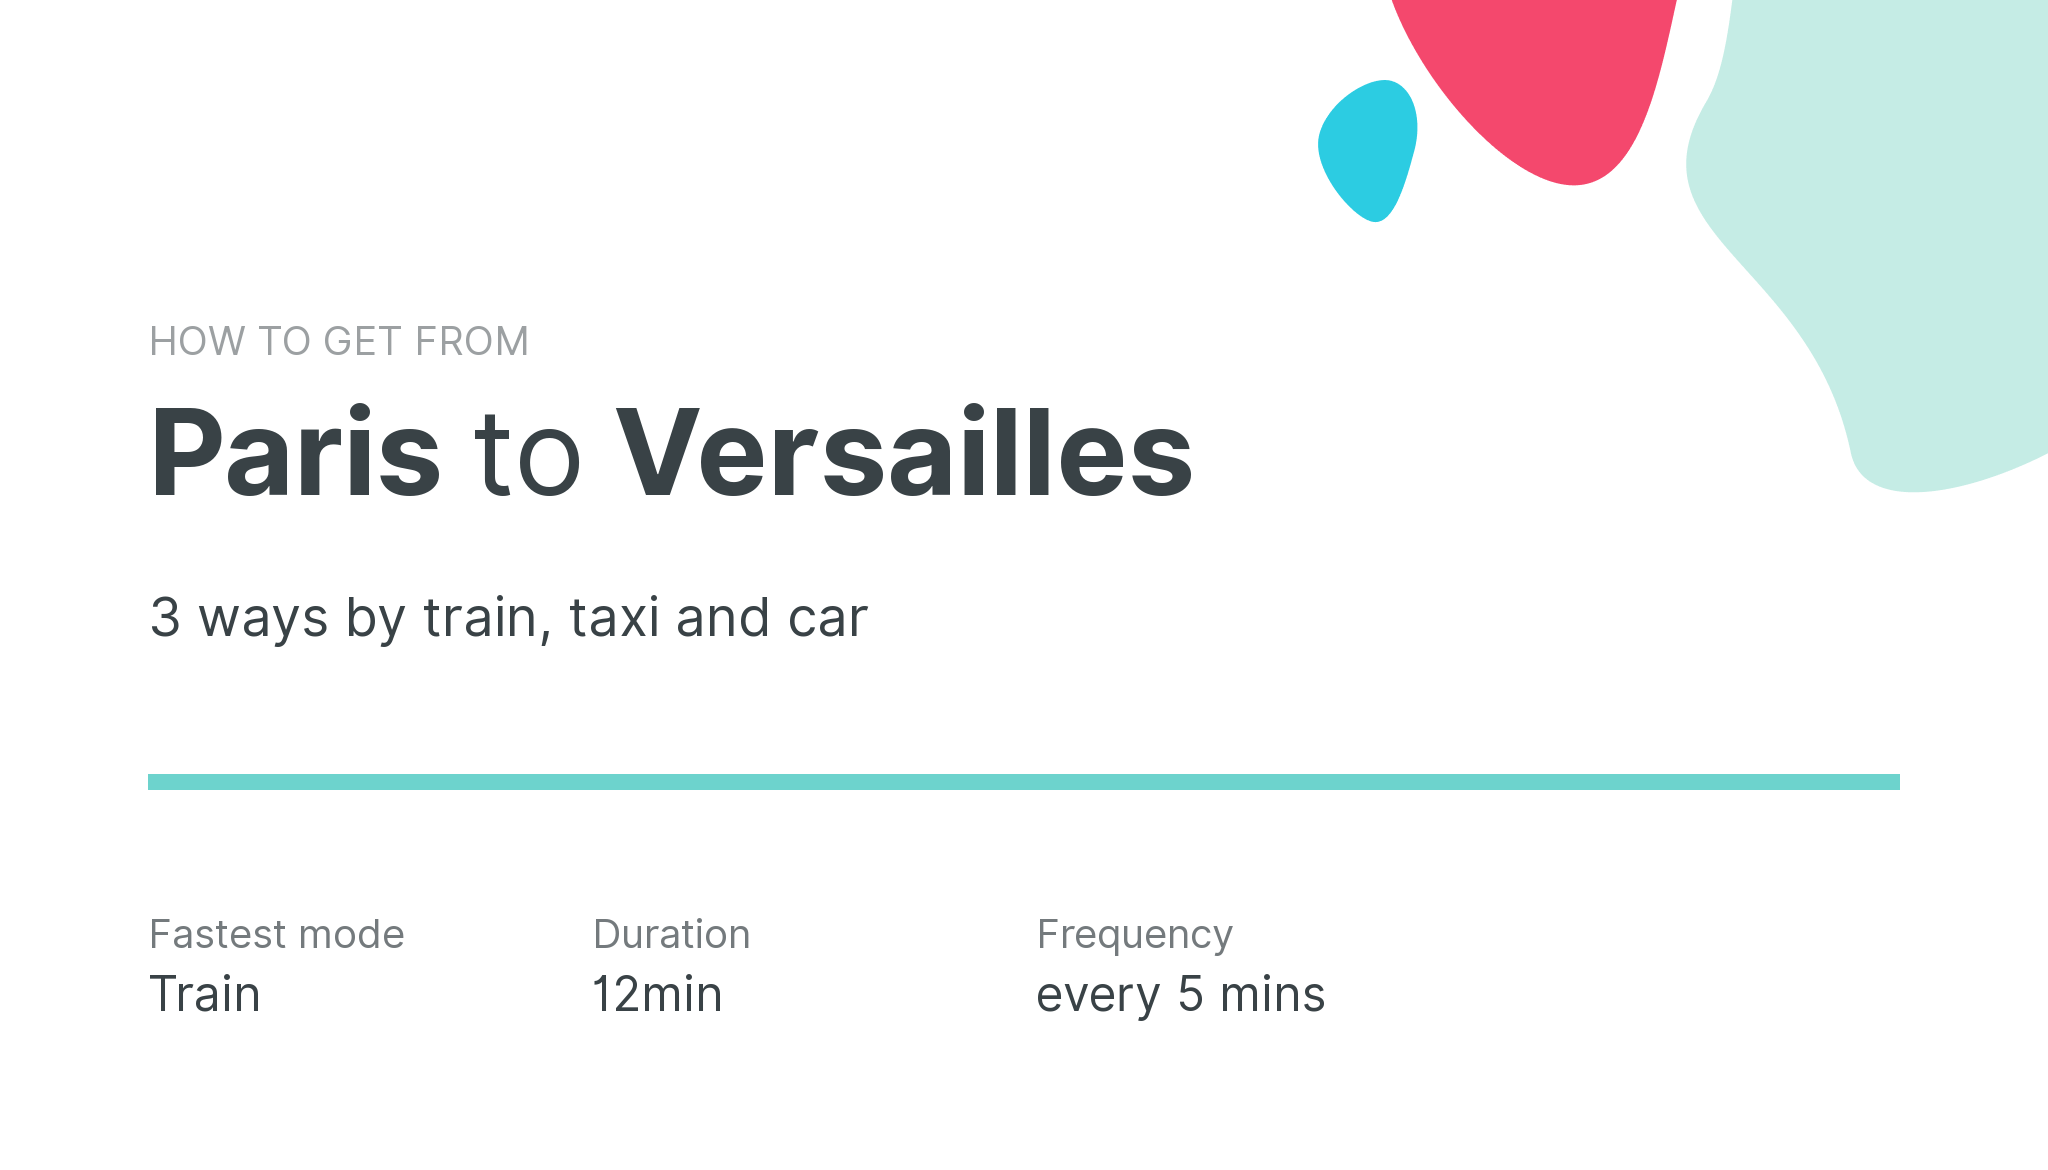 How do I get from Paris to Versailles